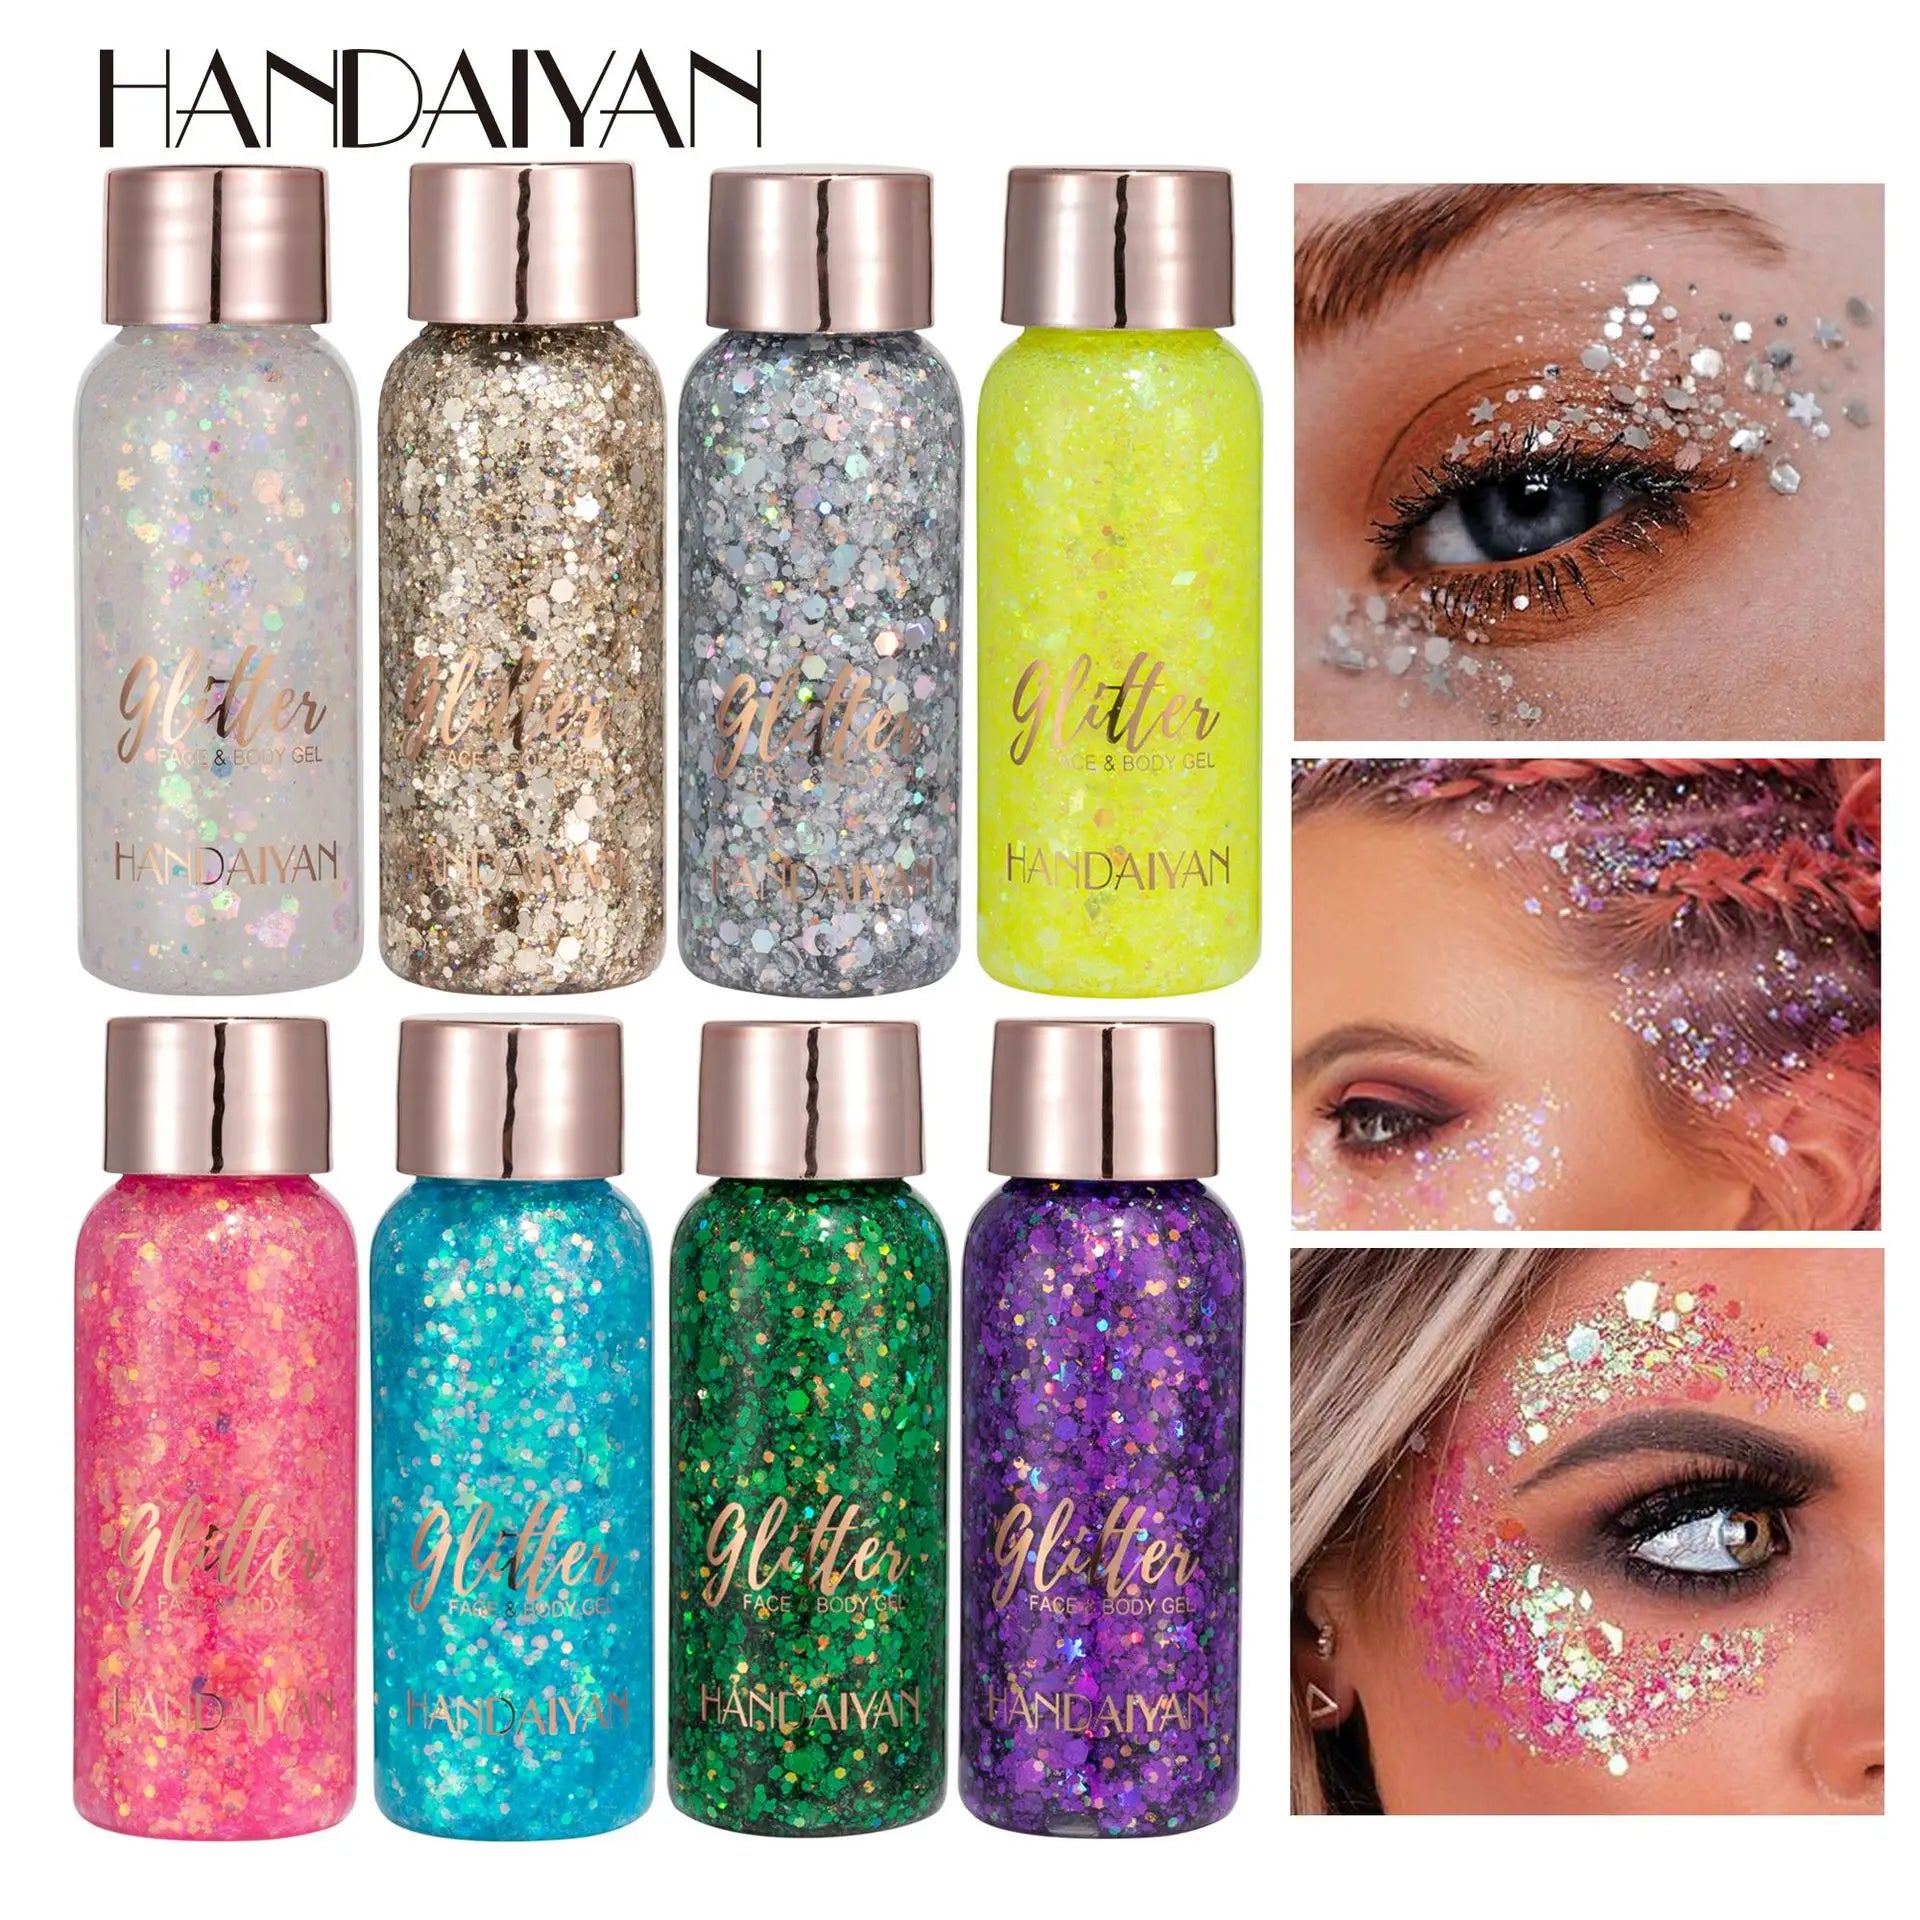 Sparkling Beauty Kit: Glitter Glam Makeup Essentials